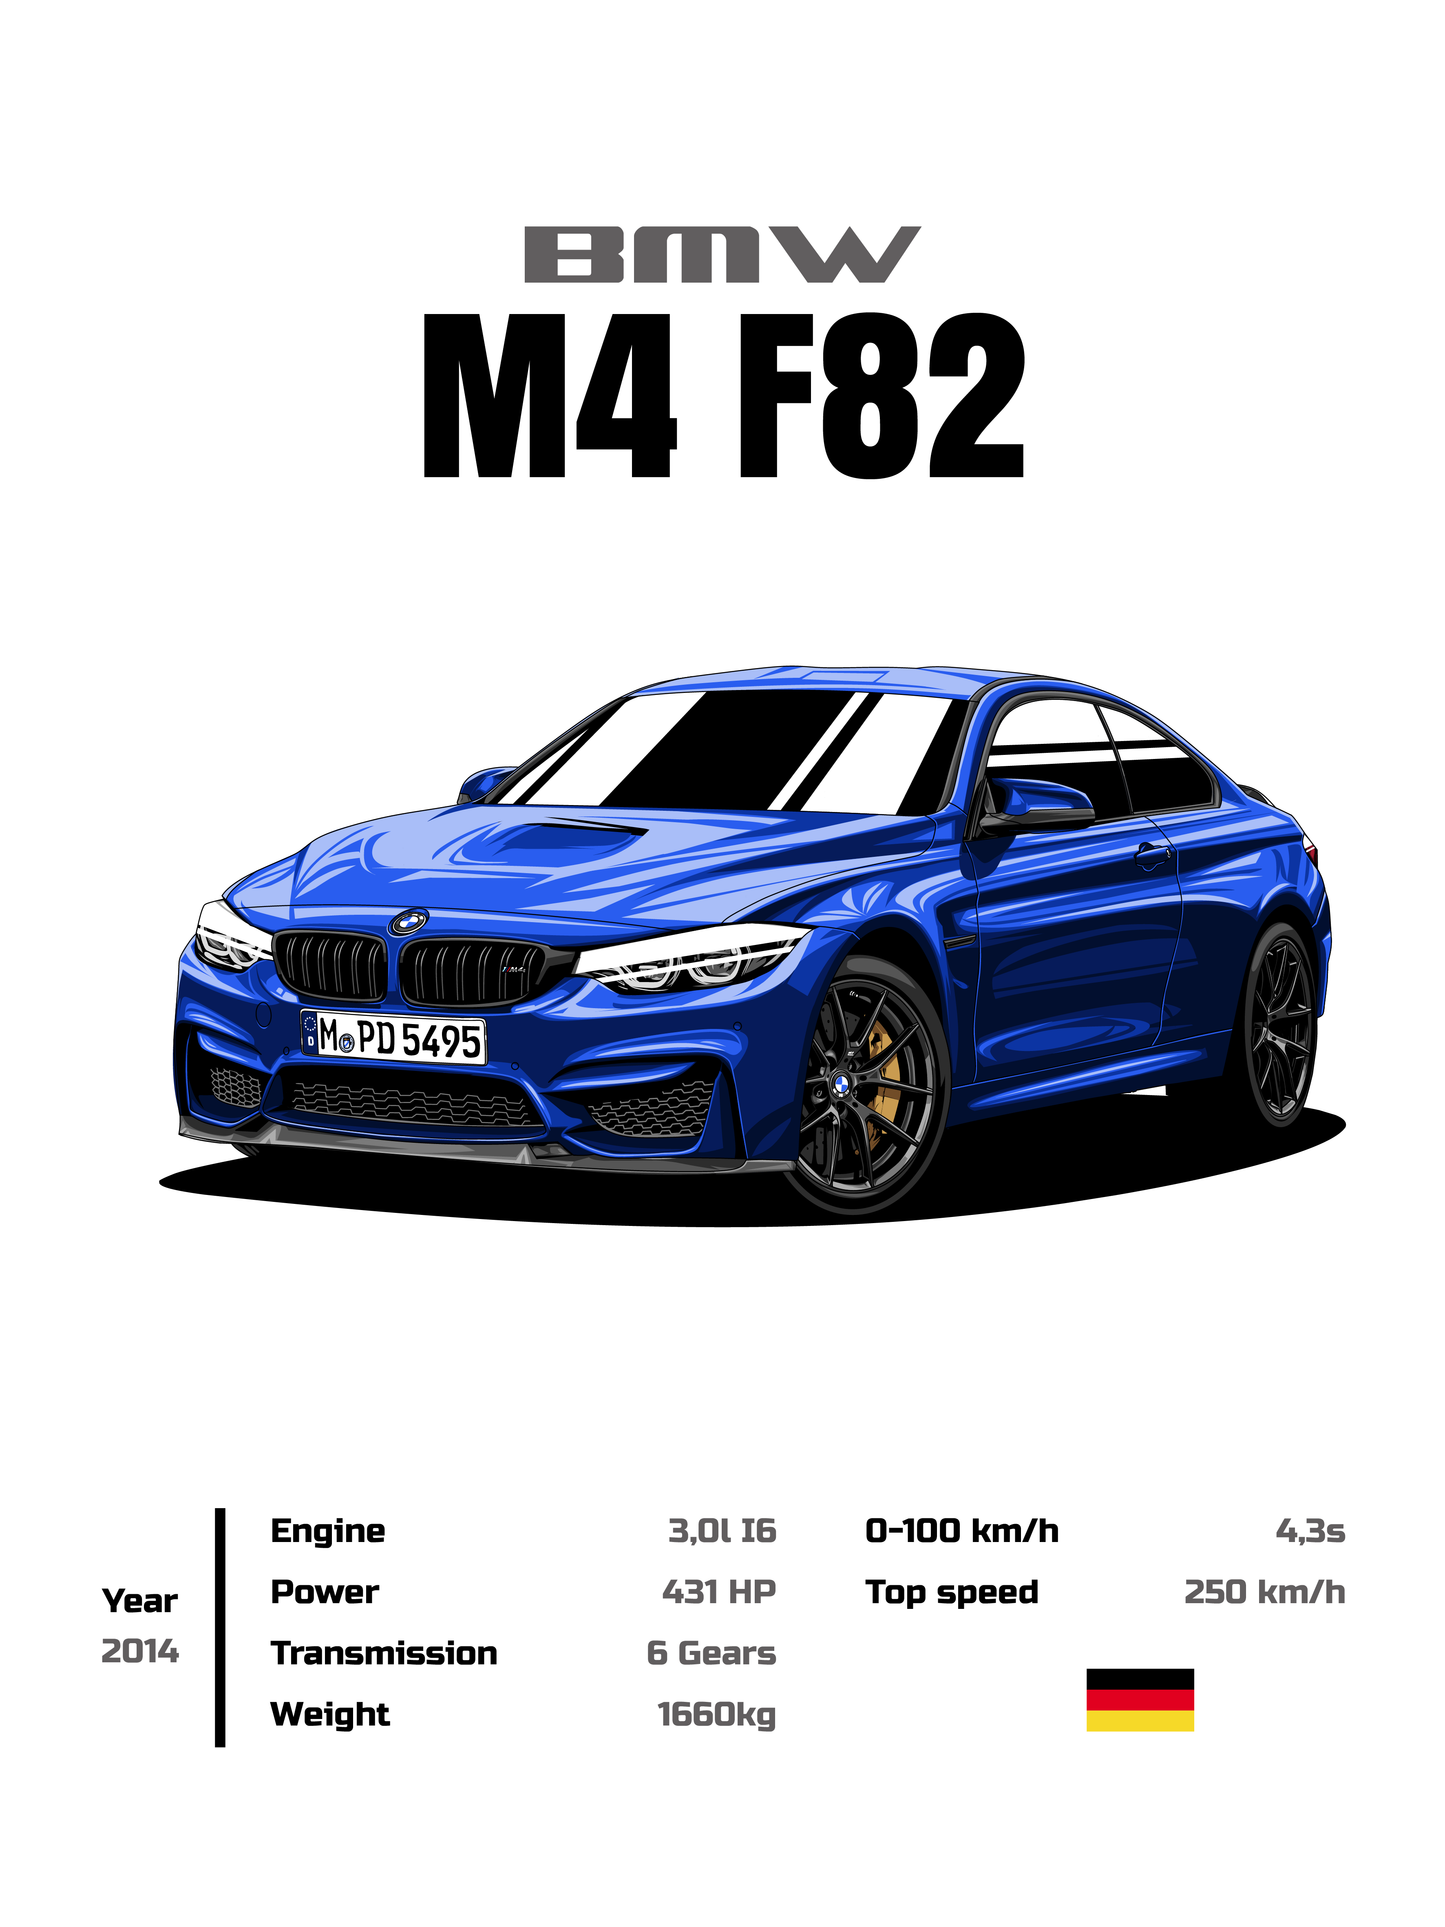 BMW M4 F82 Cars Stats Poster